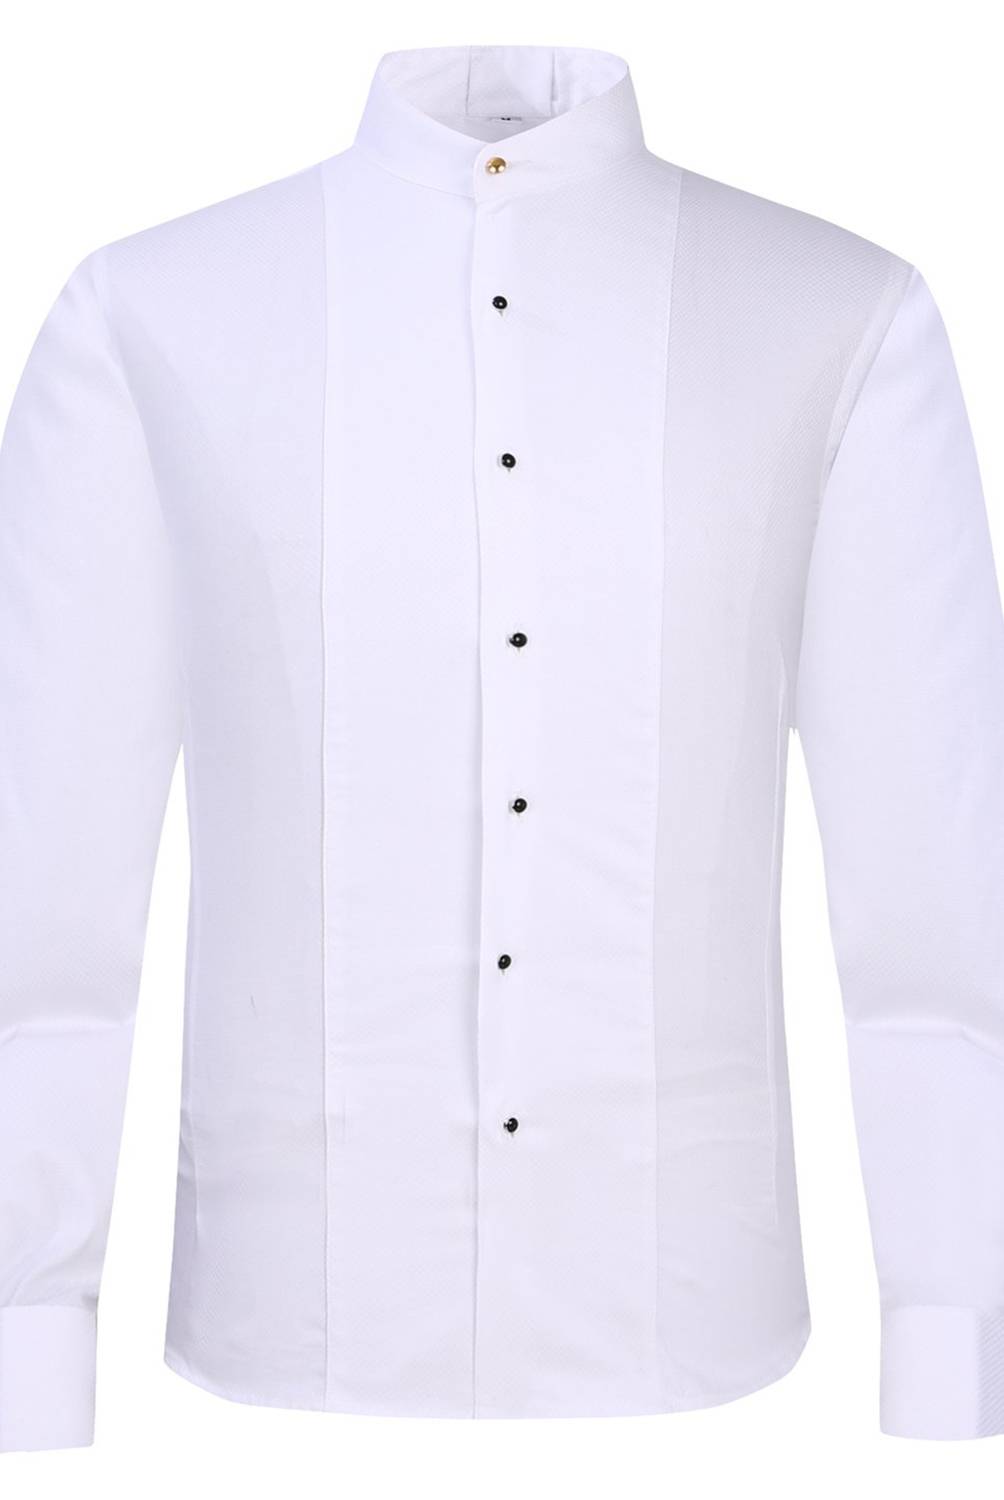 ALTERMEN - Camisa De Gala Blanca Fantasia